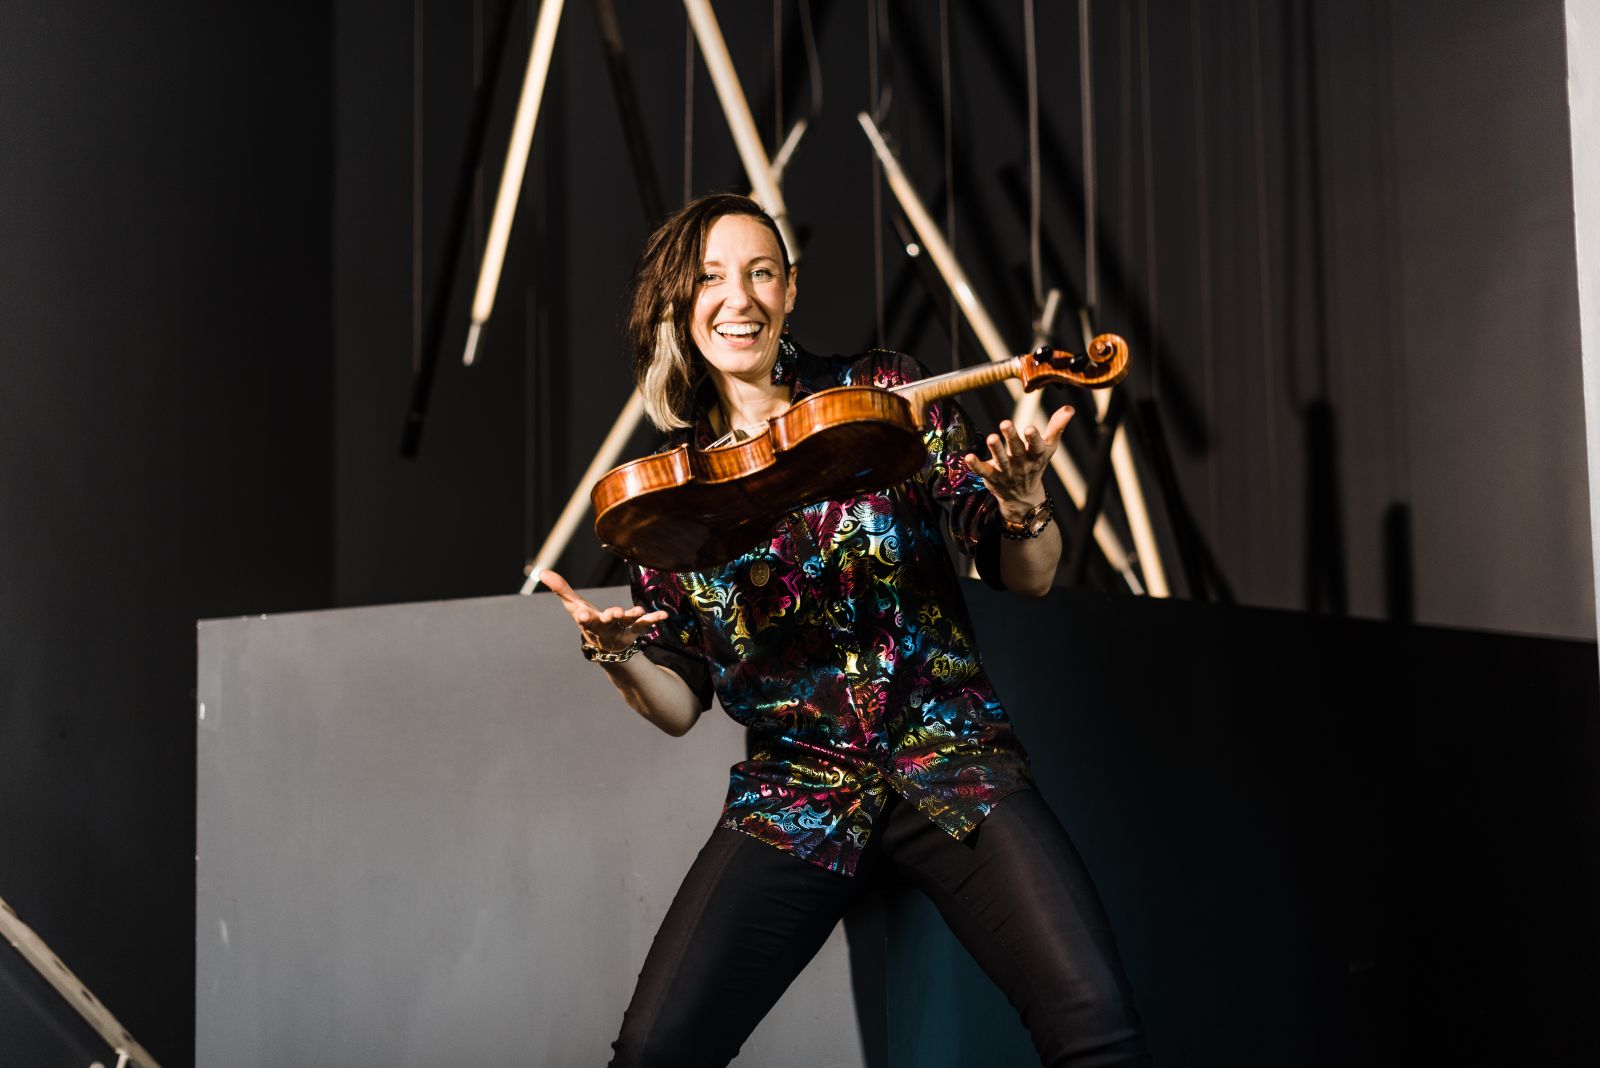 Lauren Spaulding excitedly hold her instrument